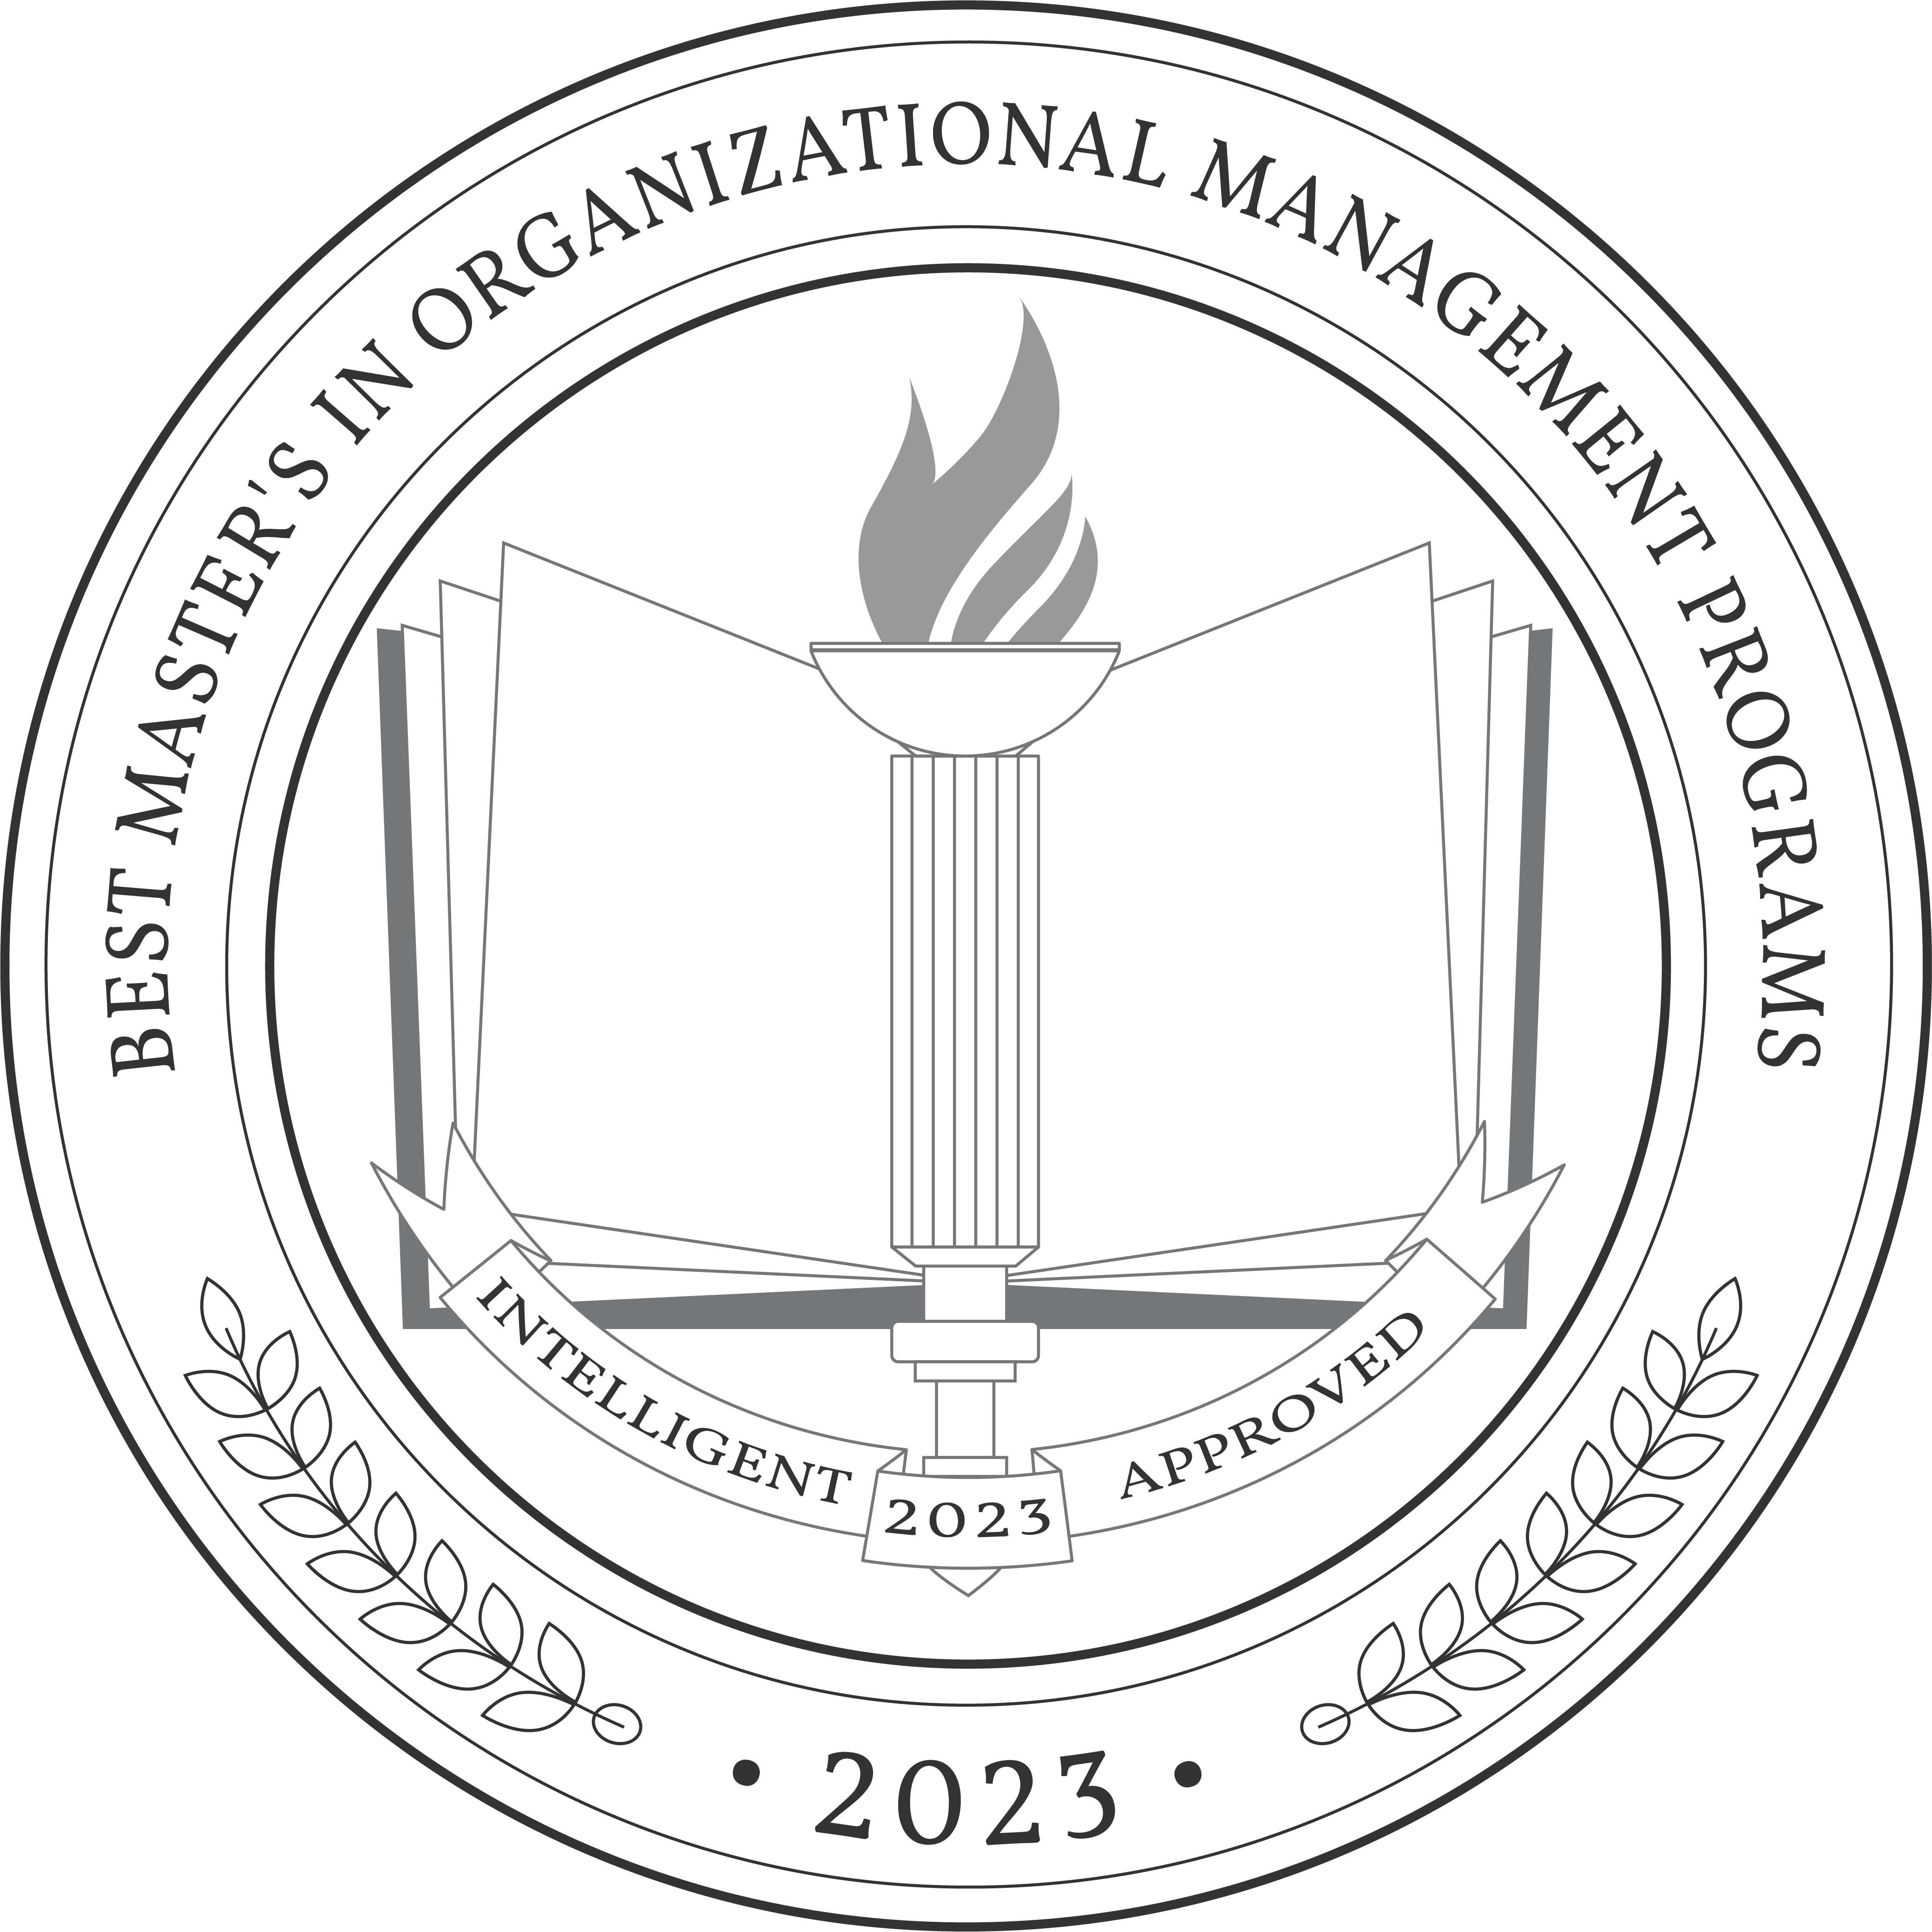 Best Master's in Organizational Management Programs badge